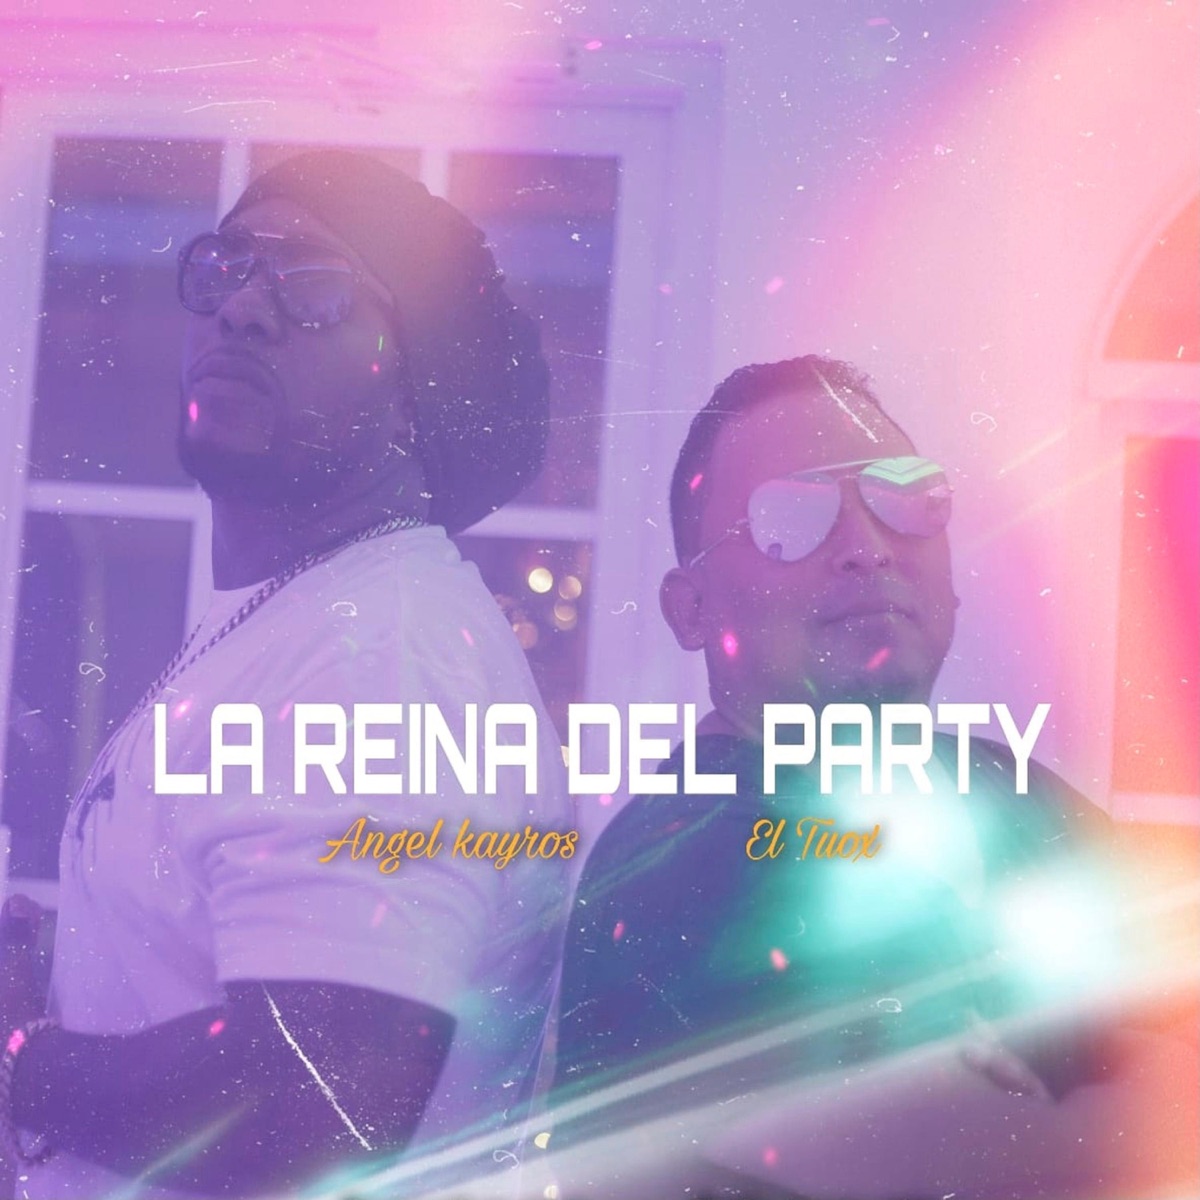 La reina del Party (feat. El Tuox) [Remix] [Remix] - Single” álbum de Angel  Kayros en Apple Music